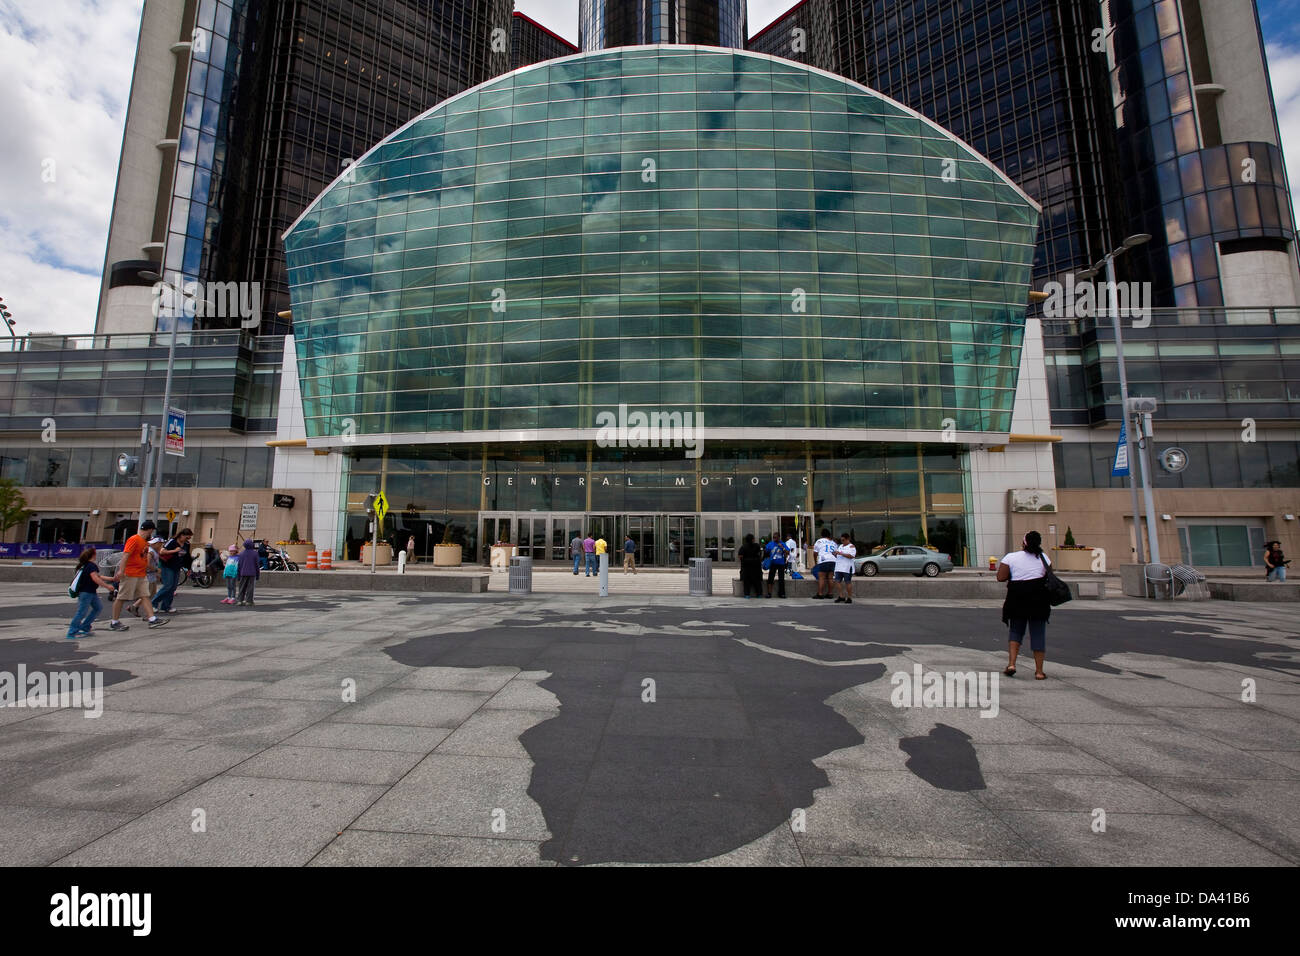 General Motors corporate headquarters is seen in Detroit Renaissance Center Stock Photo